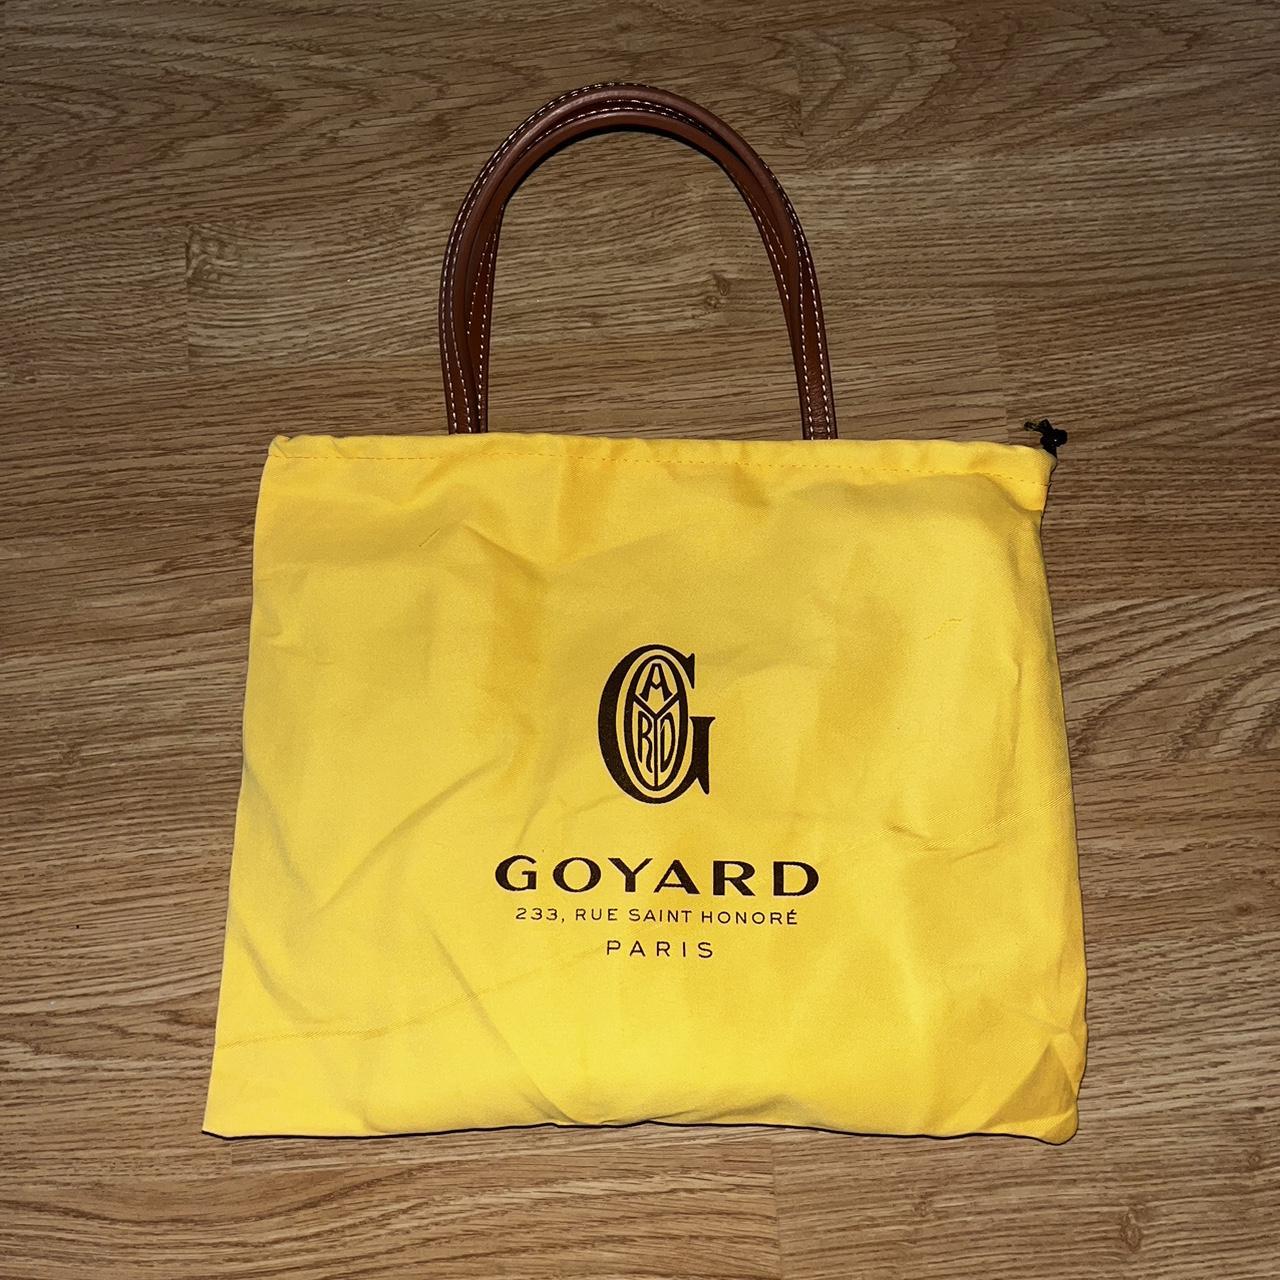 Goyard tote bag in great condition, a few dirt marks - Depop